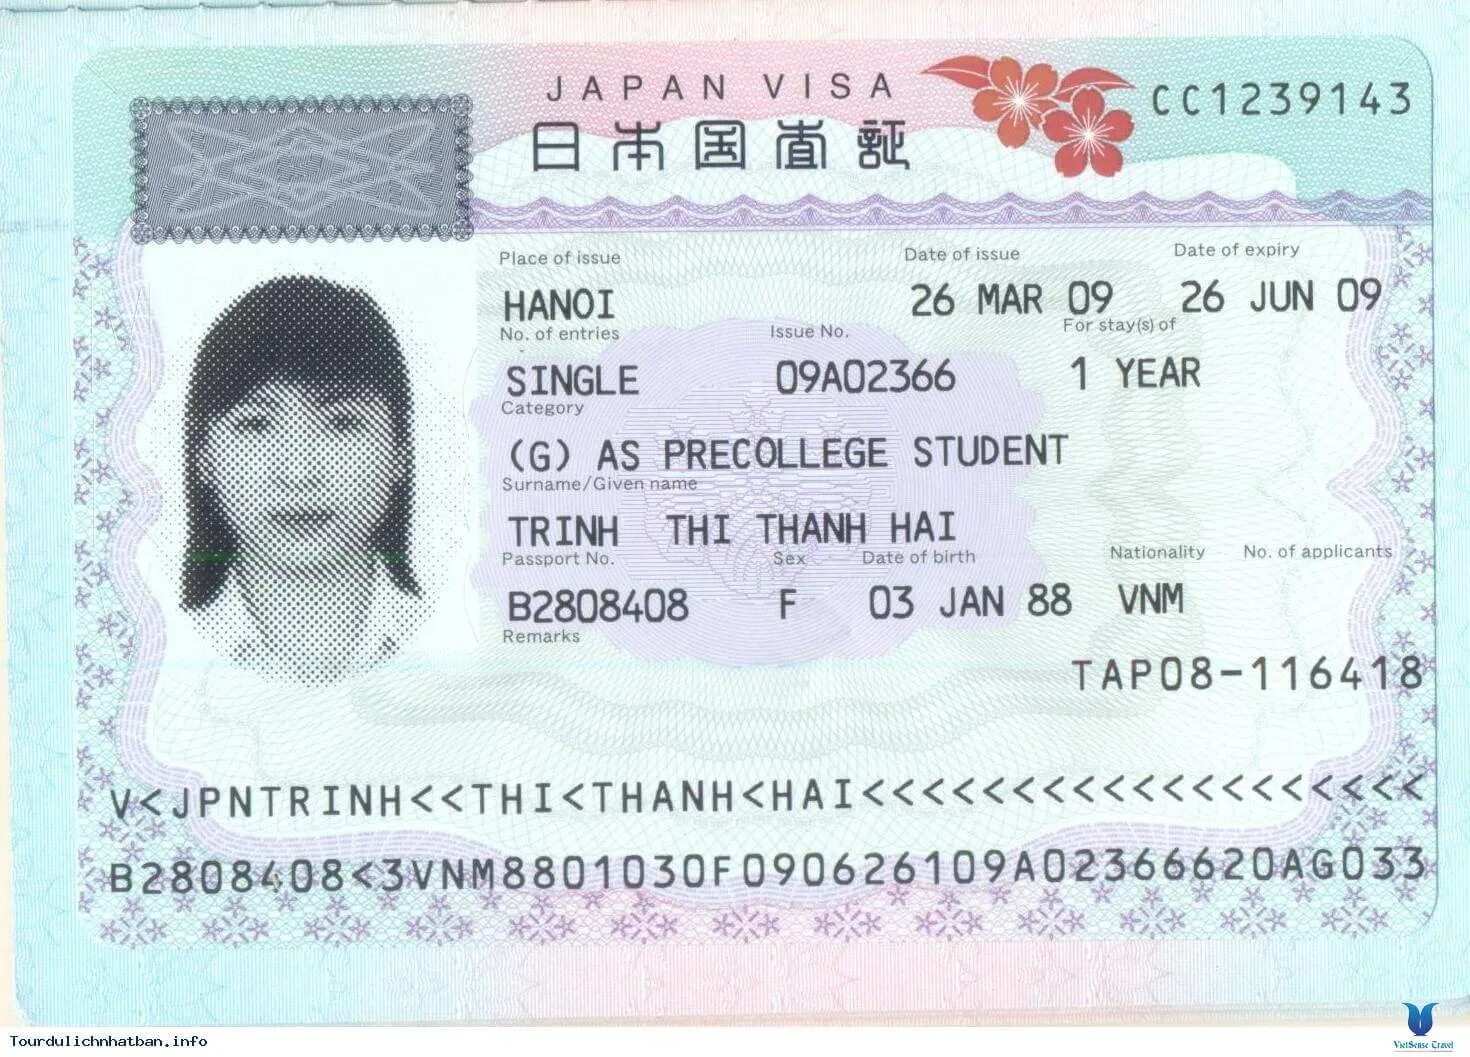 Passport issued. Passport Expiry Date. Place of Issue Passport. Passport expiration Date.